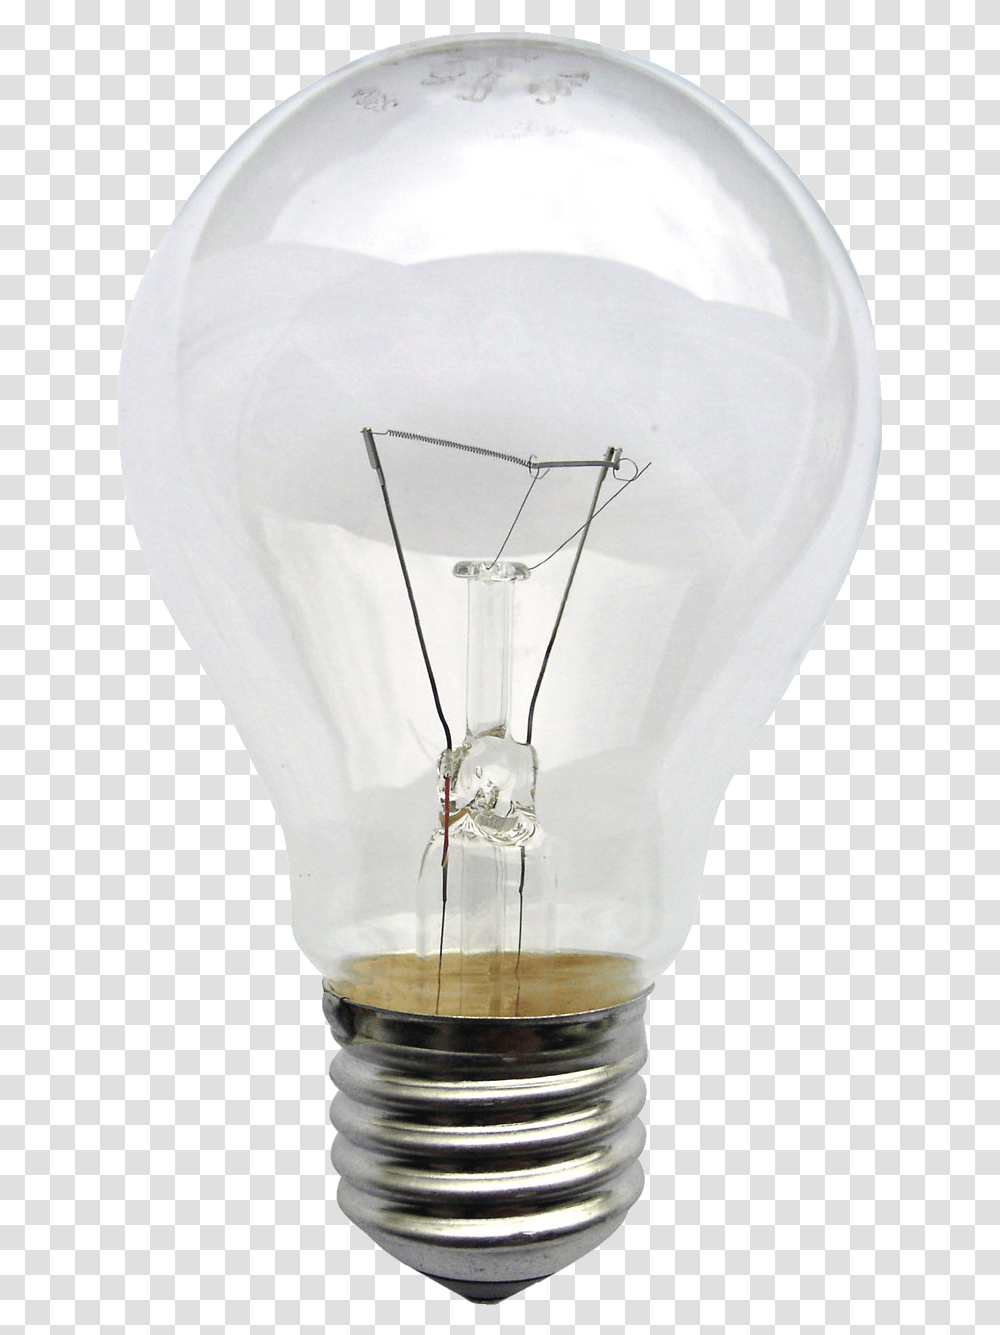 Incandescent Light Bulb Wikipedia Thomas Edison Invention Light Bulb, Lightbulb, Lamp,  Transparent Png